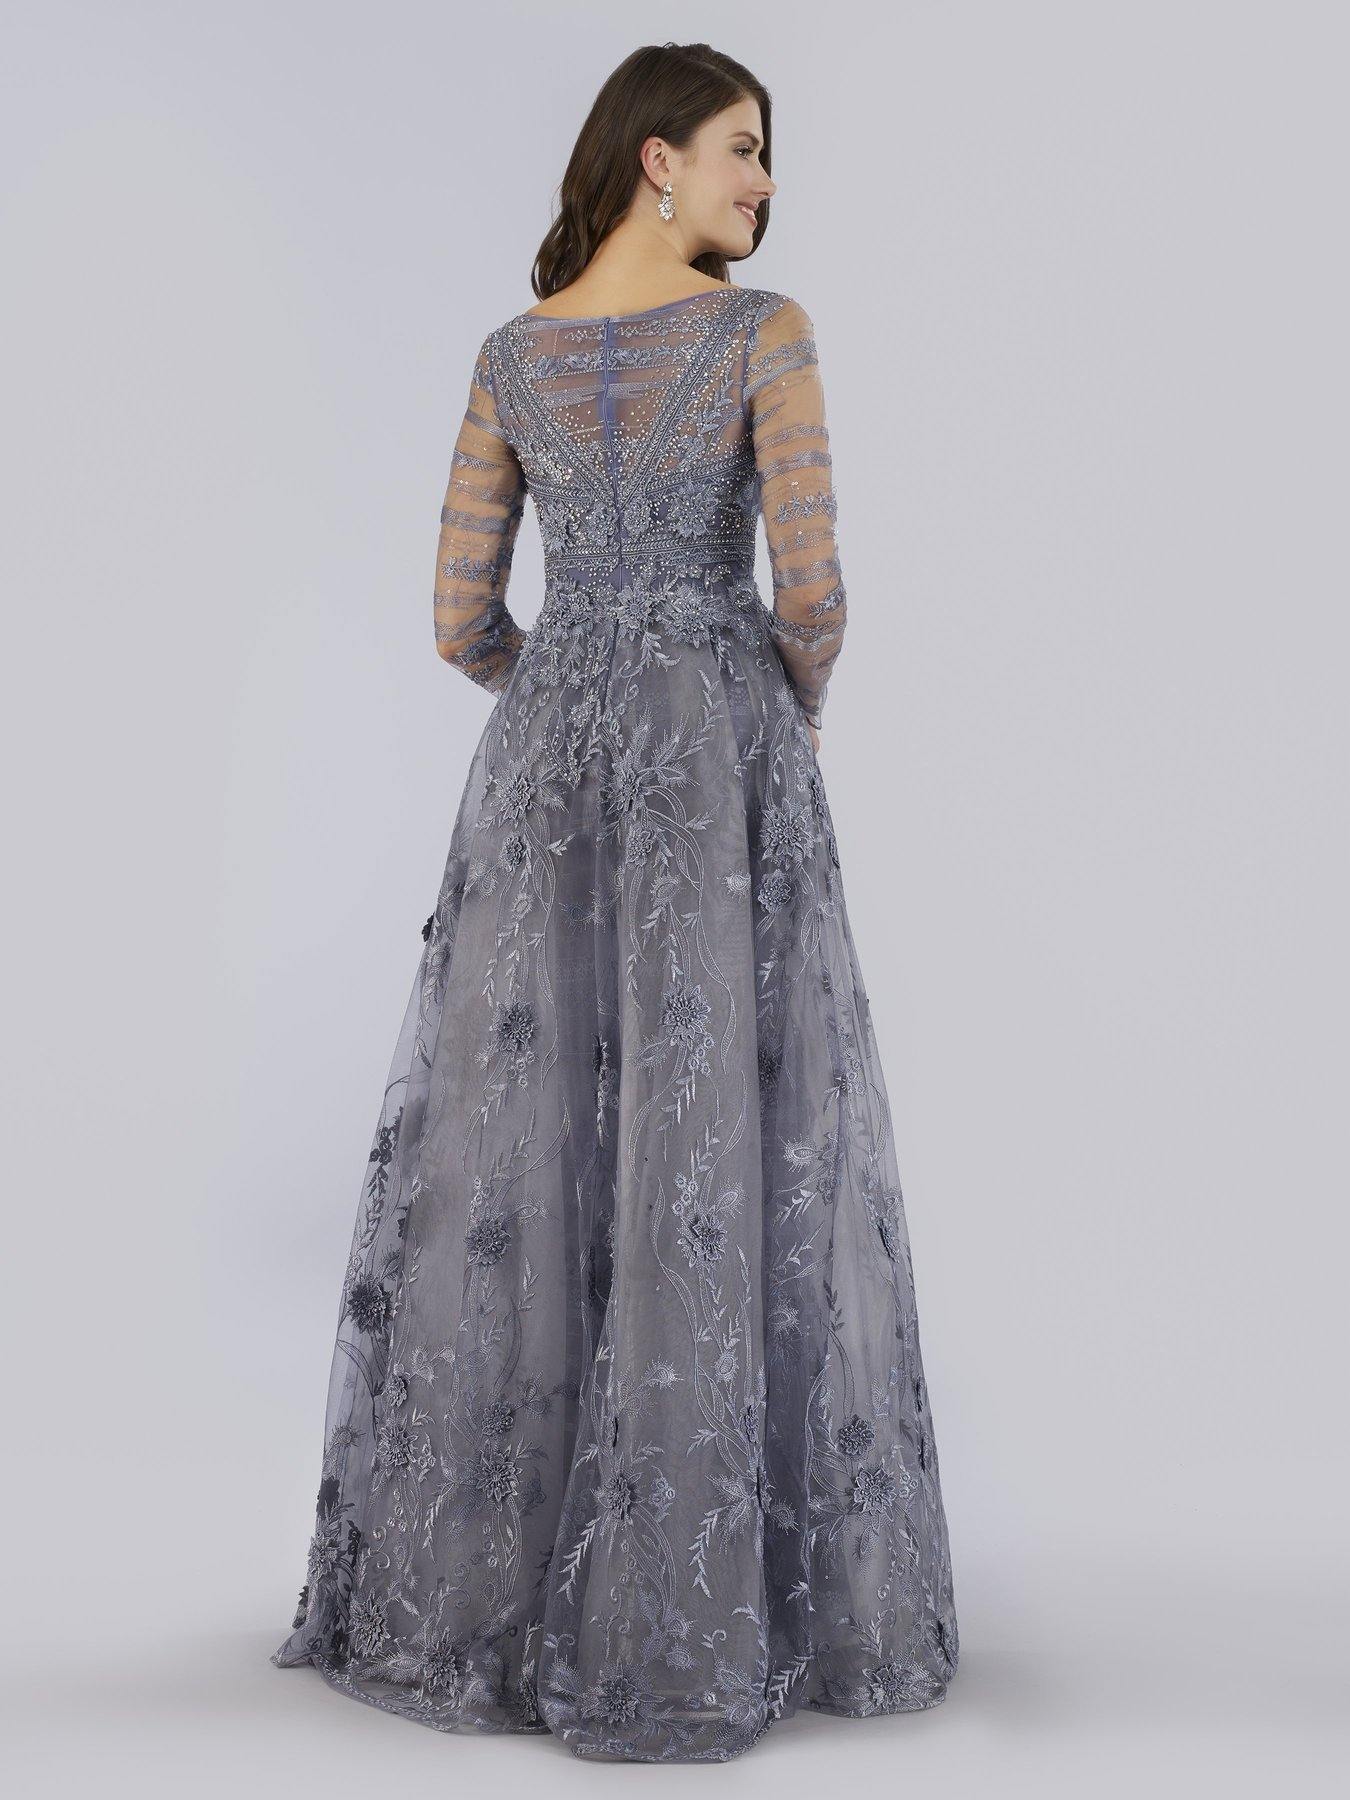 Lara Dresses A-Line Long Prom Dress 29755 - The Dress Outlet